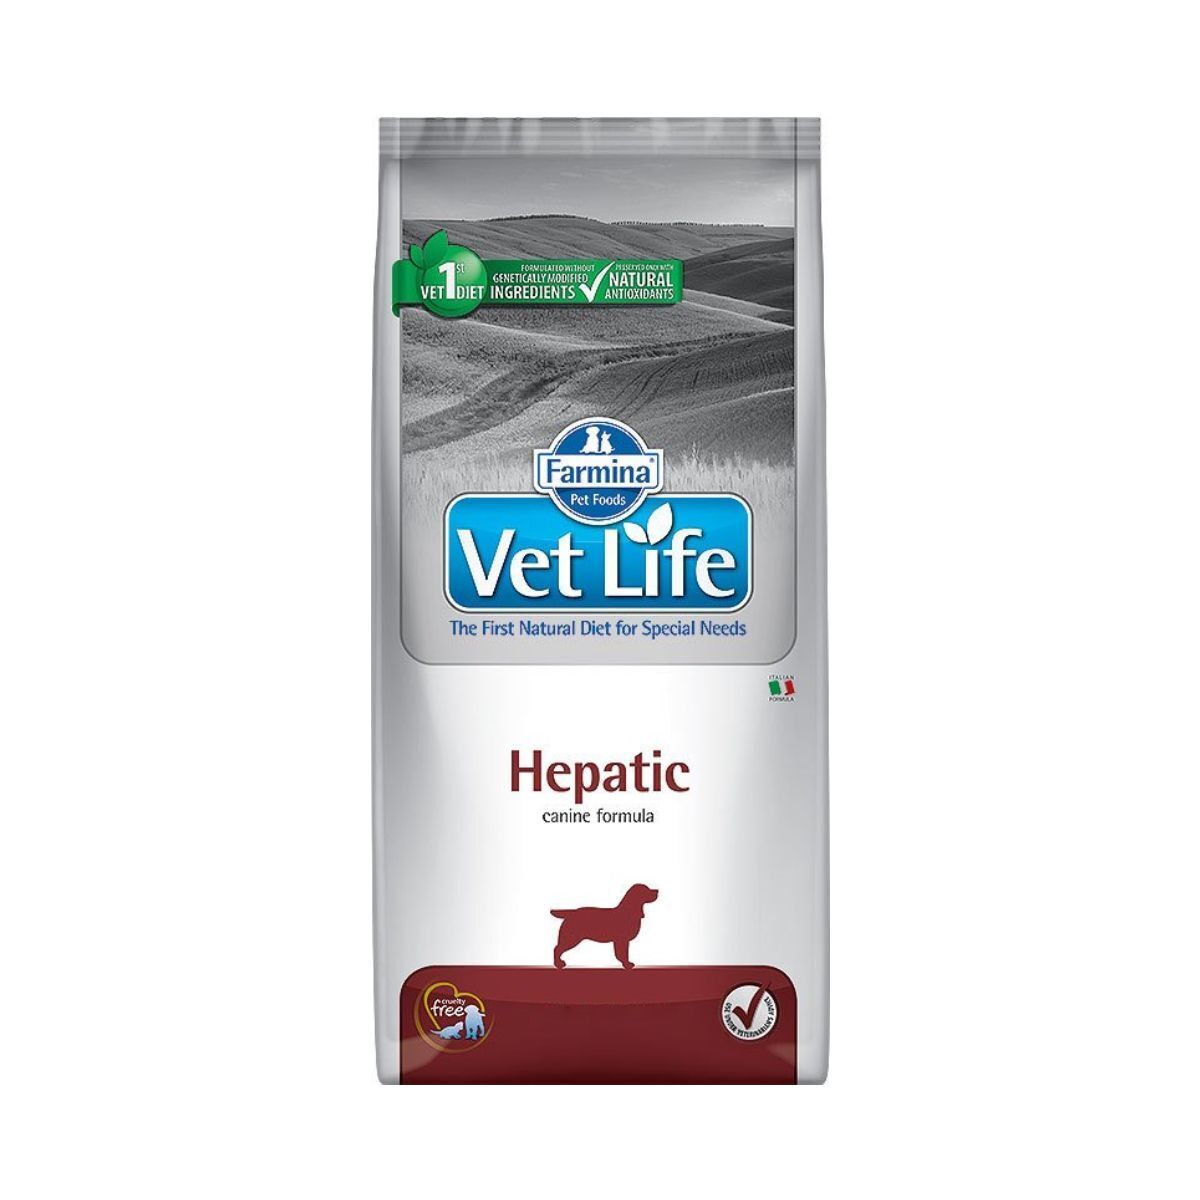 Vet life gastrointestinal купить. Корм для собак vet Life Hypoallergenic. Farmina vet Life hepatic для собак. Farmina vet Life hepatic консервы. Фармина Манагемент Струвит кошачий корм.